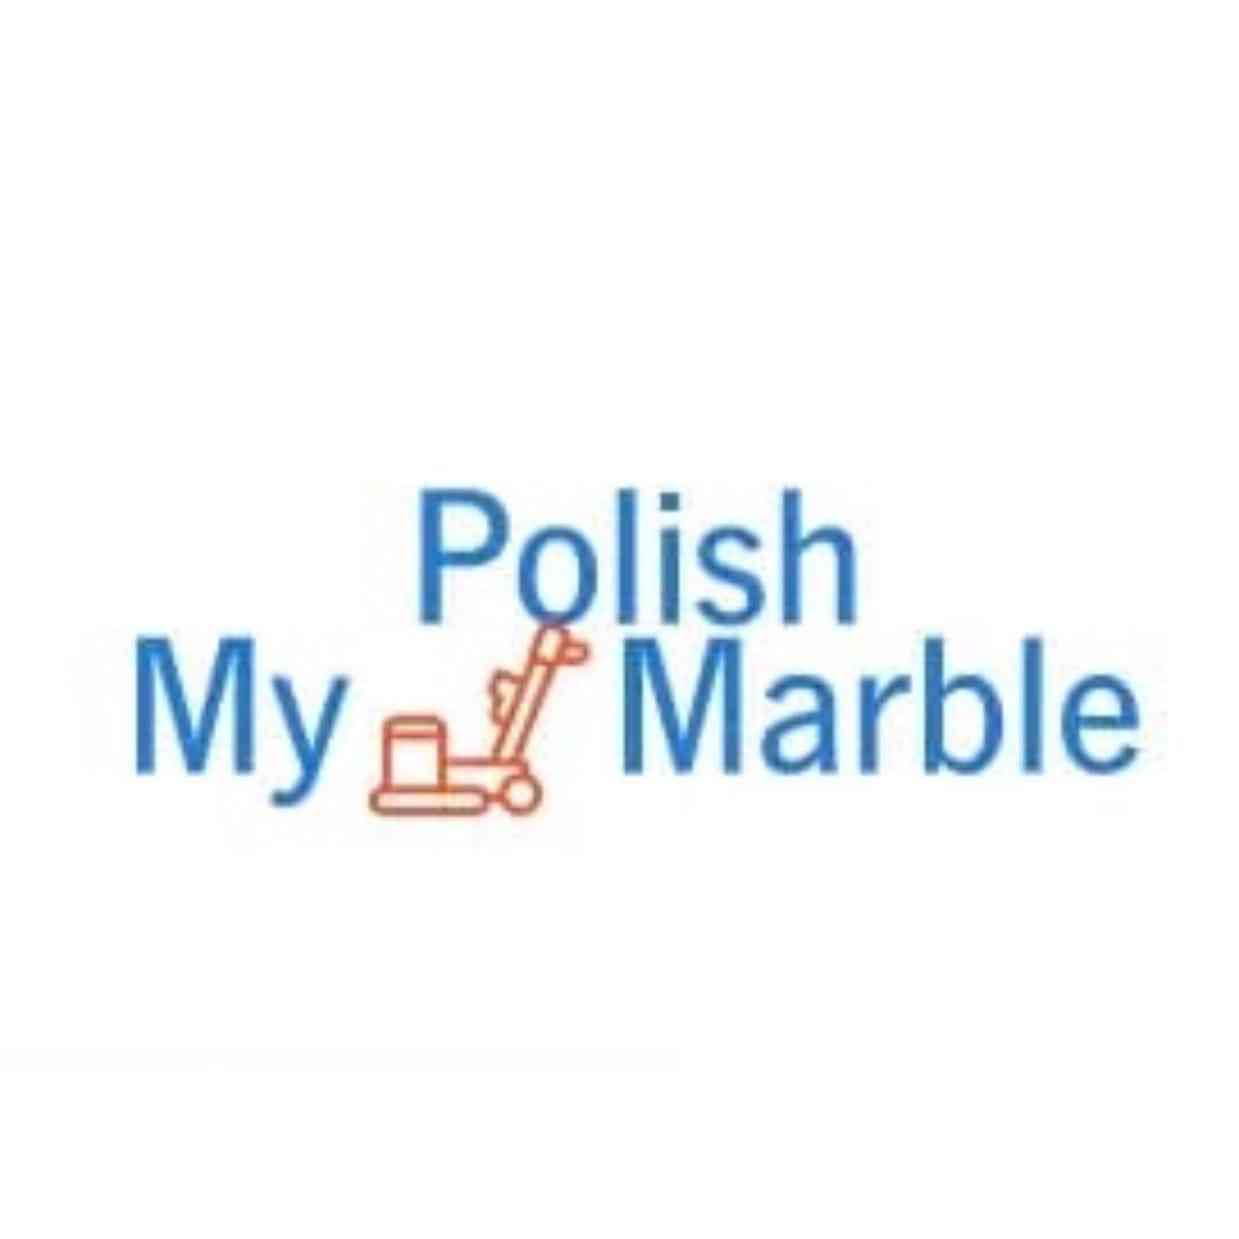 Polish My Marble